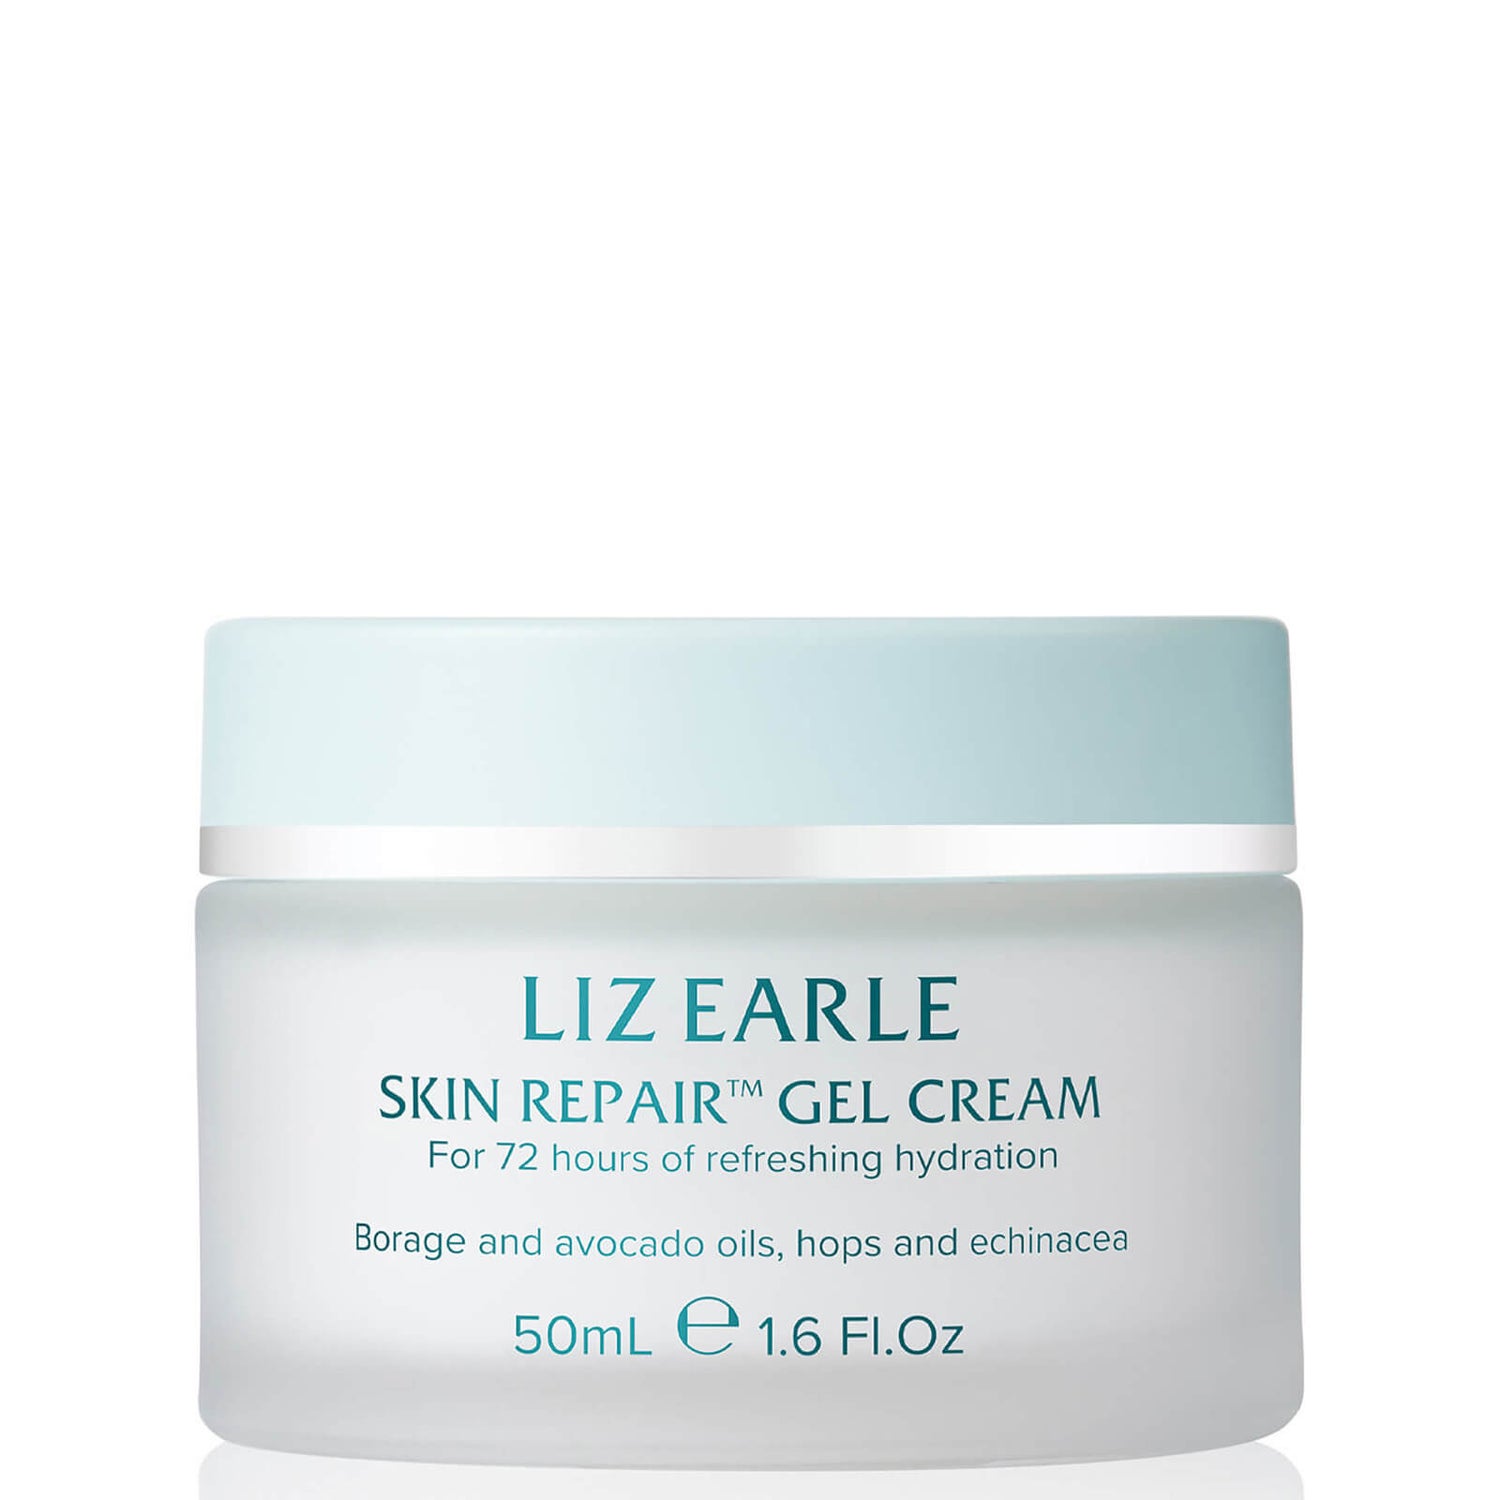 Liz Earle Skin Repair Gel